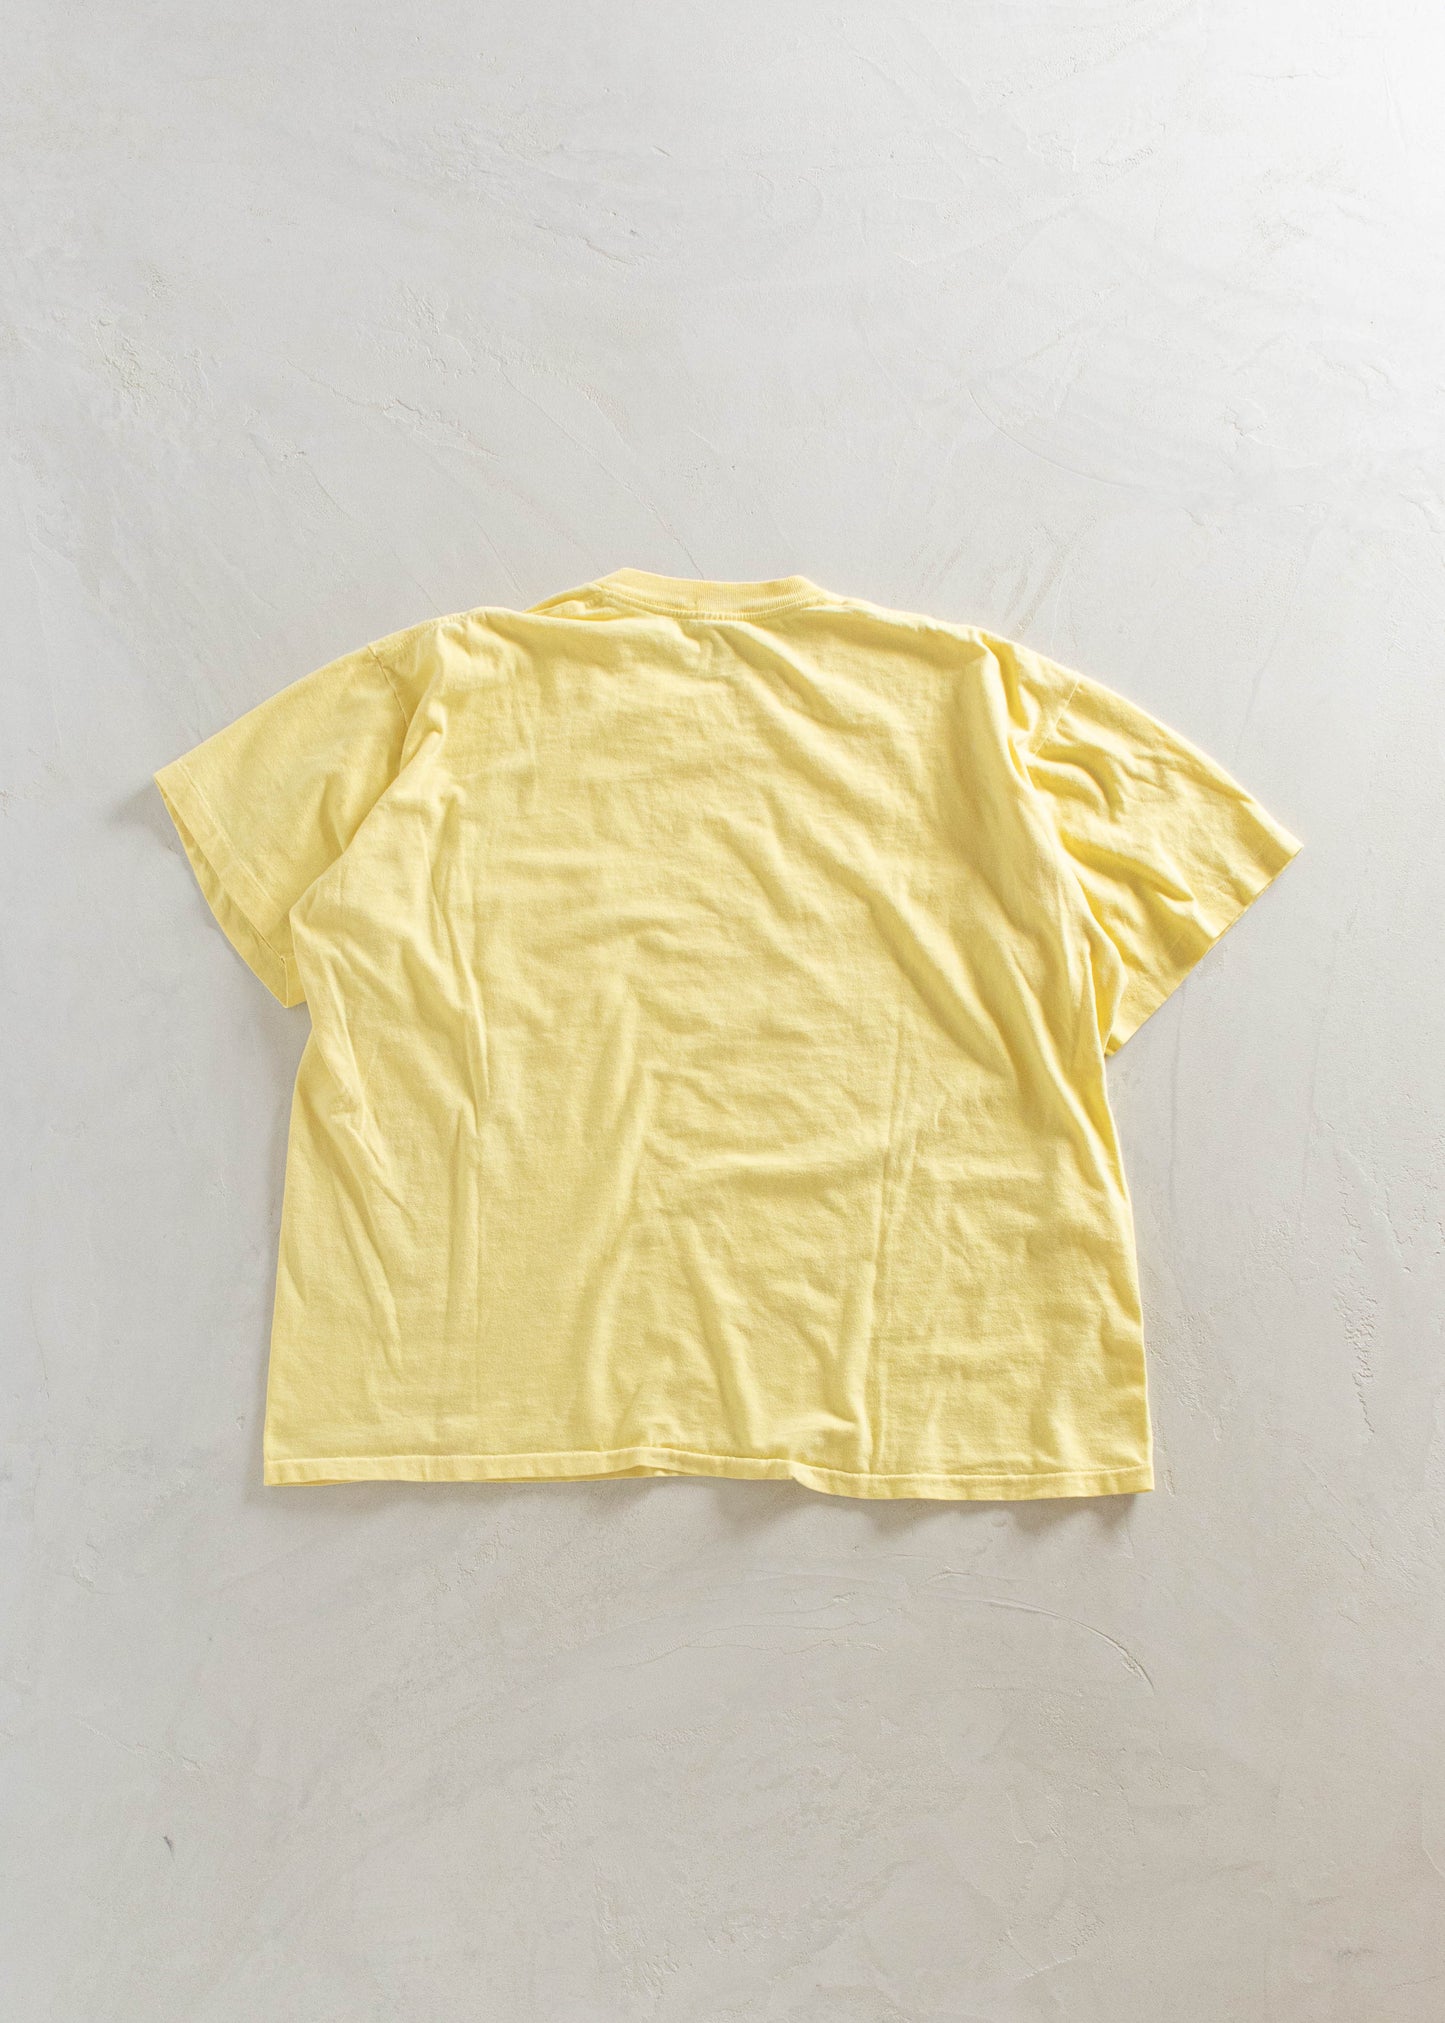 1980s Medallion Selvedge Pocket T-Shirt Size XL/2XL